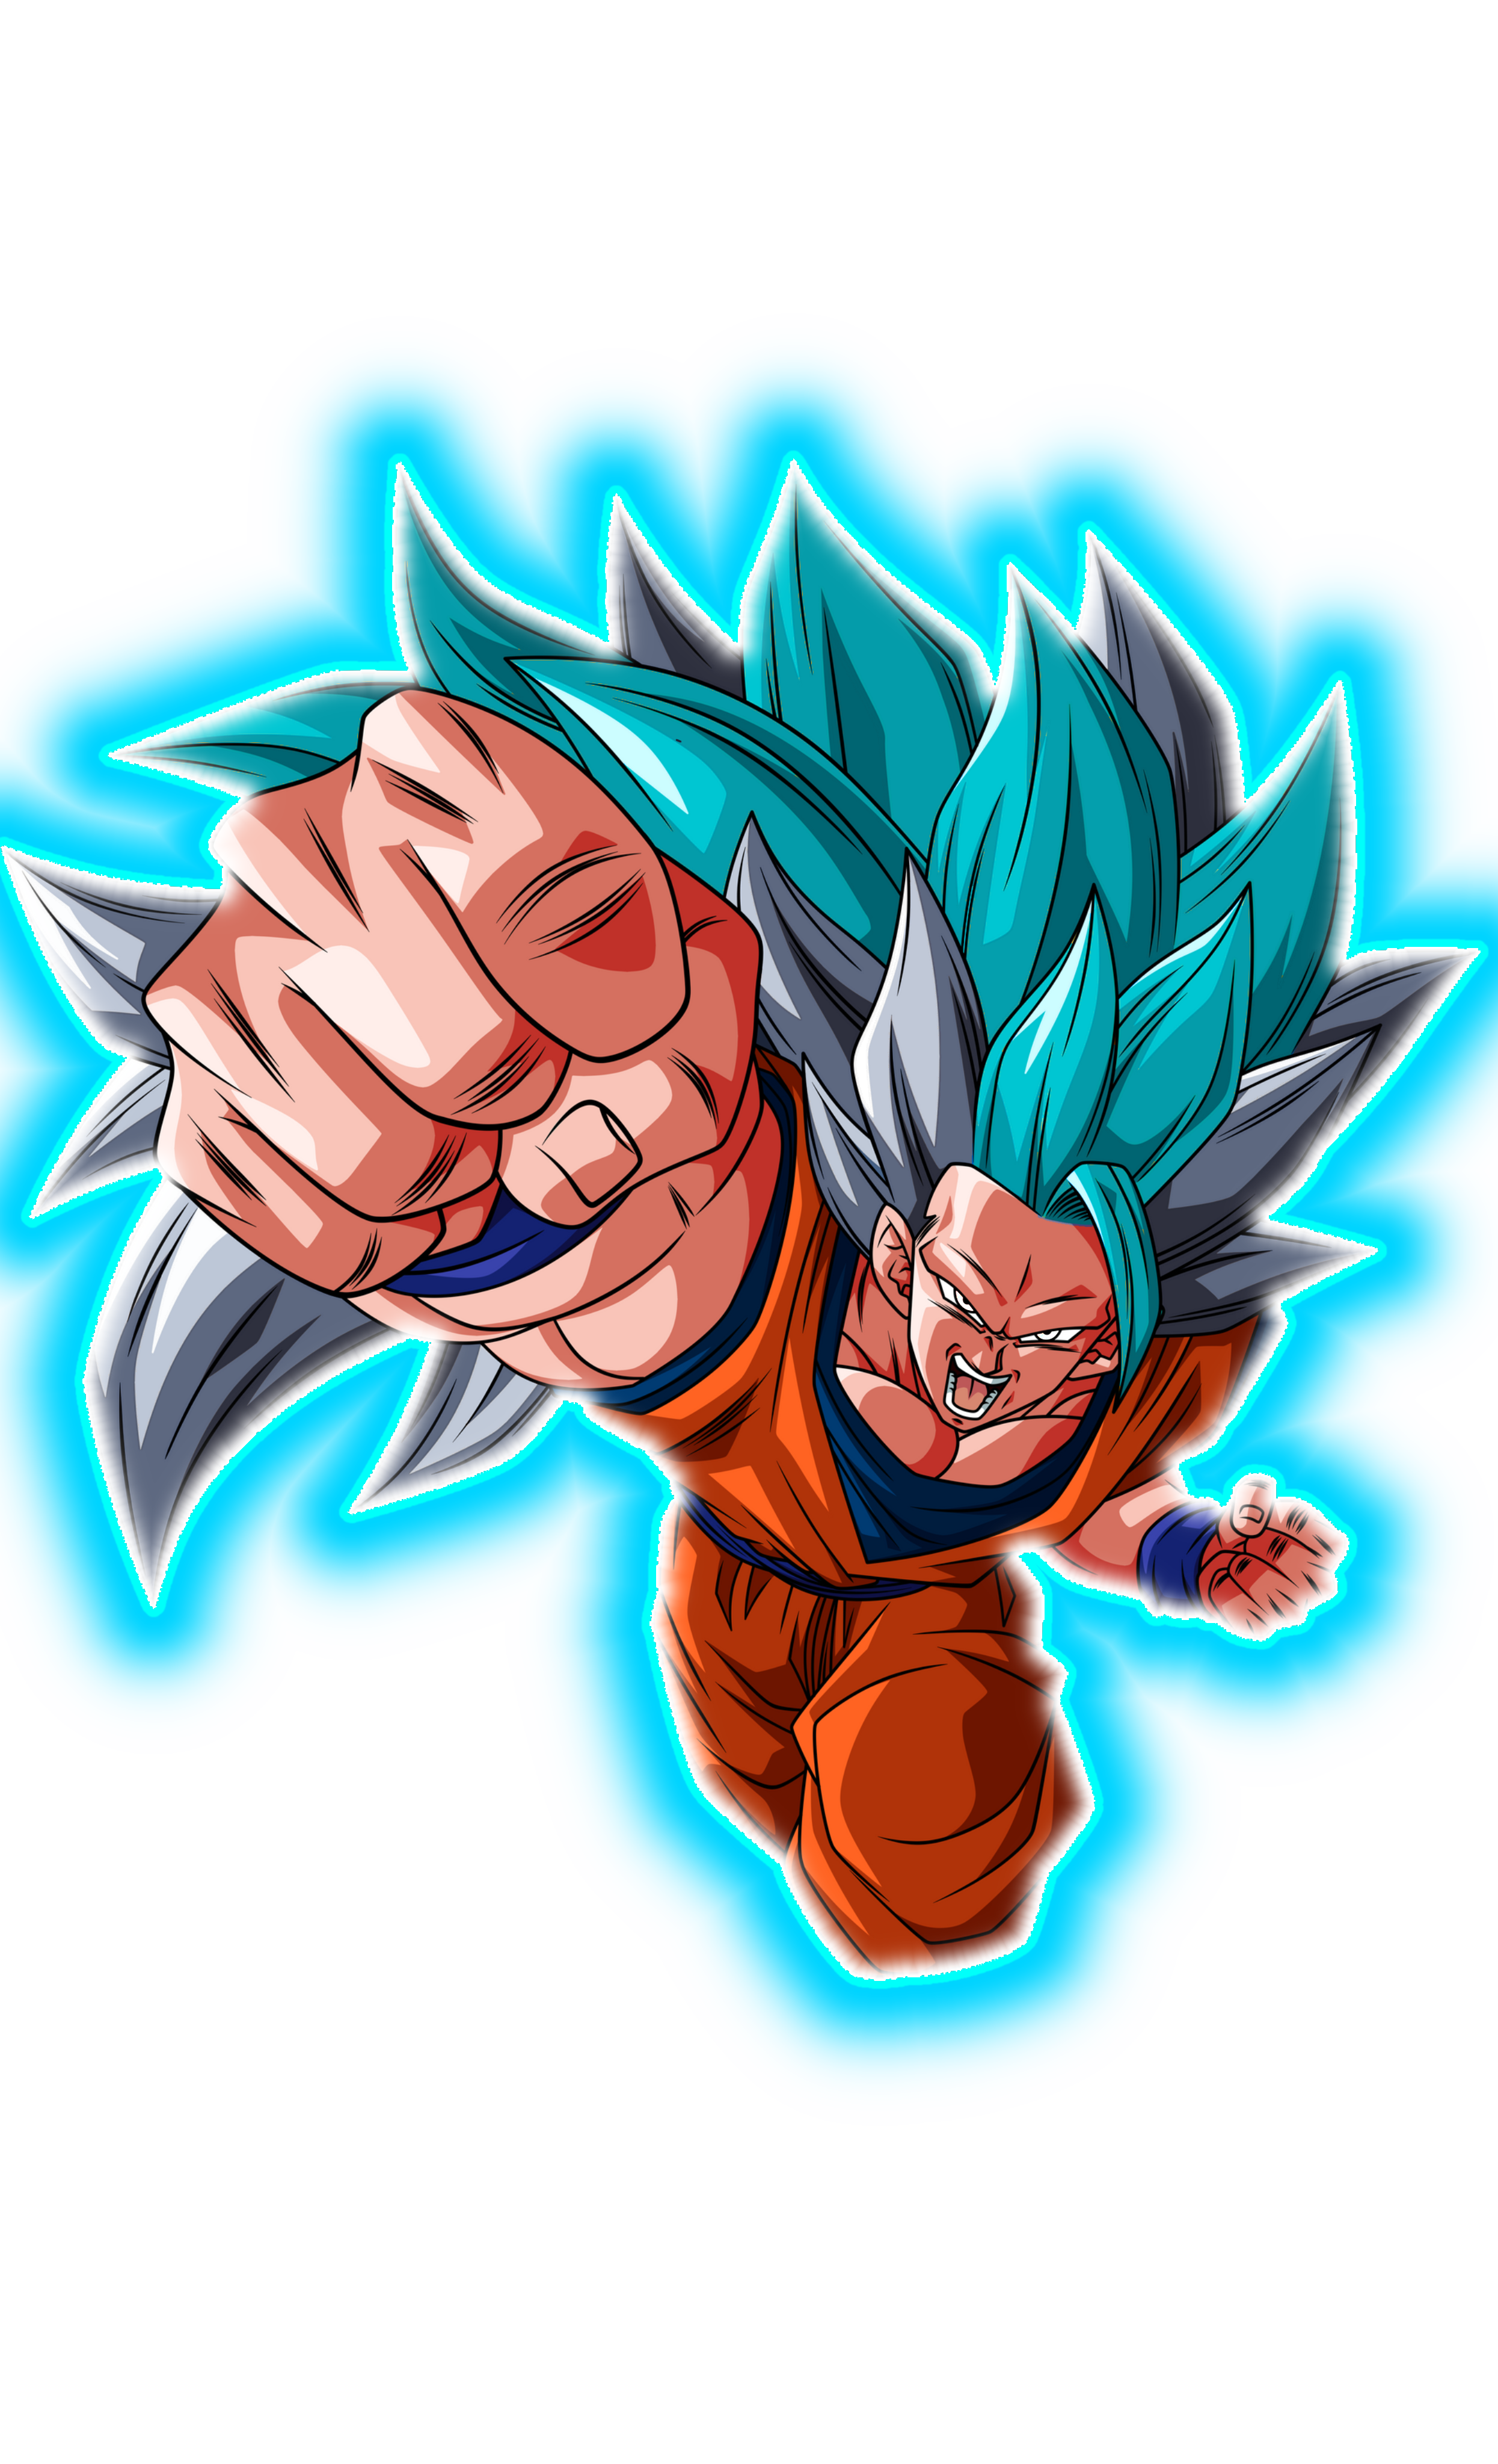 Goku SSJ BLUE UNIVERSAL by xchs on DeviantArt